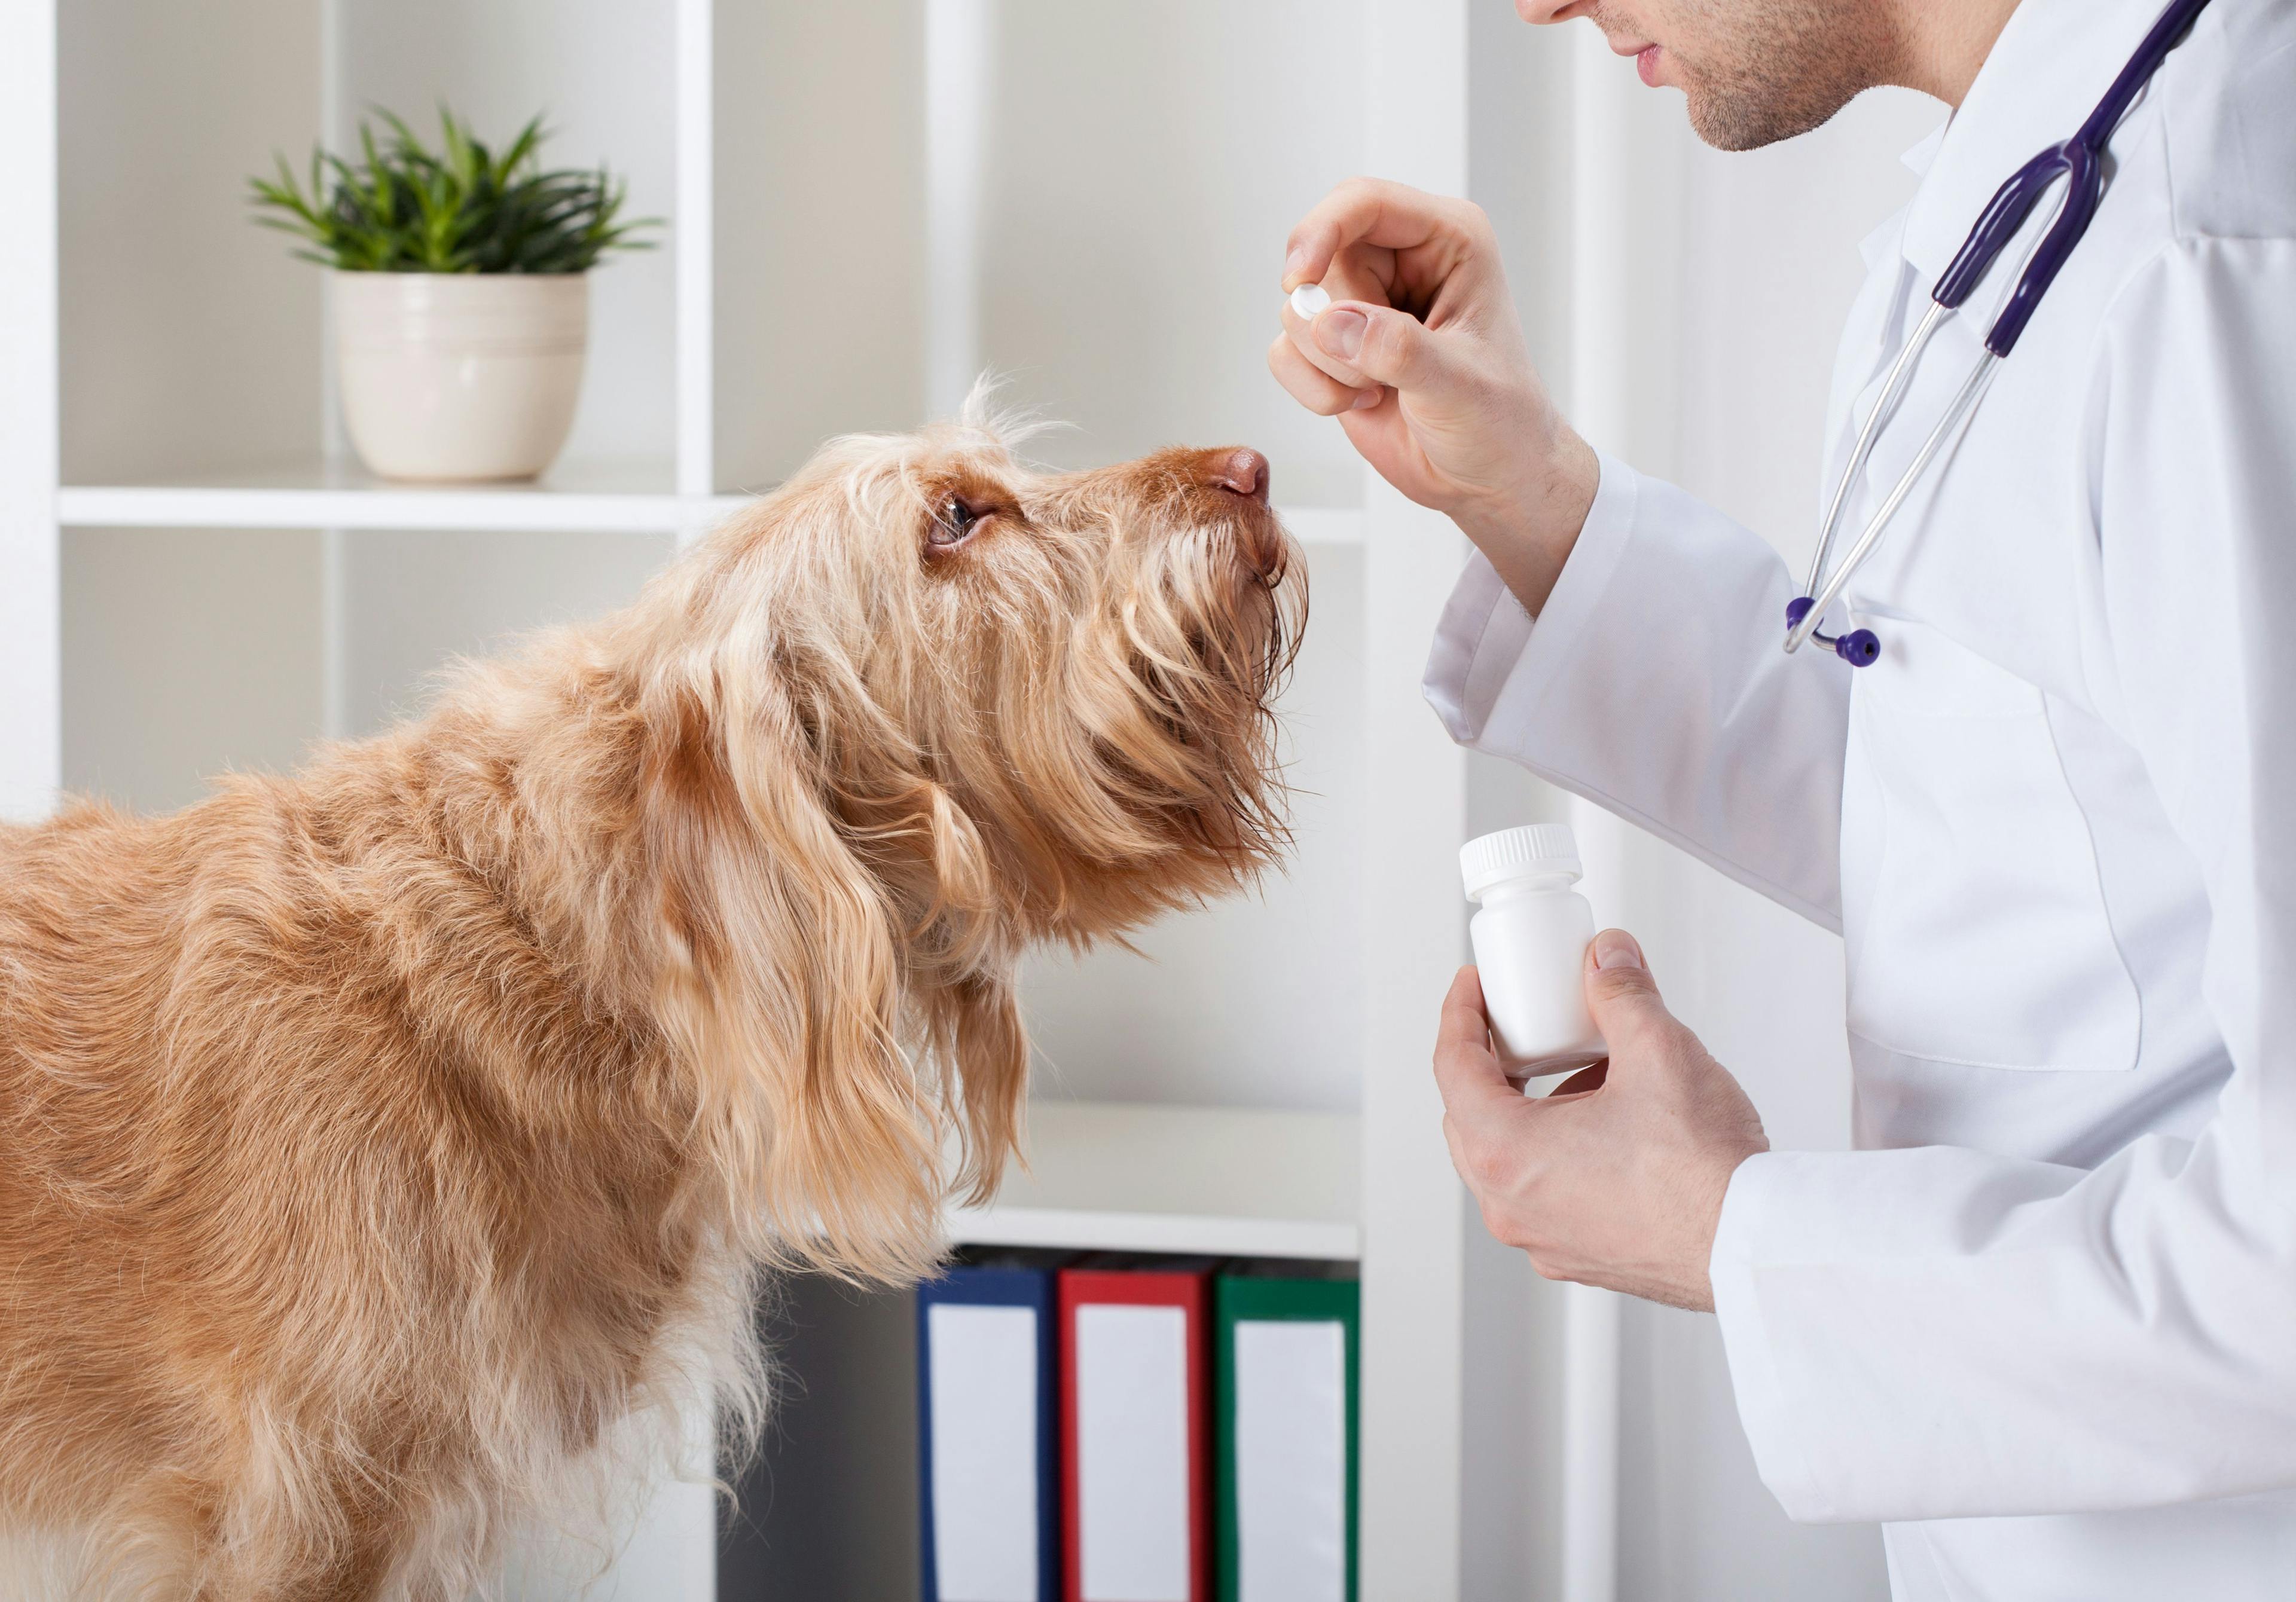 Veterinary medicine misuse